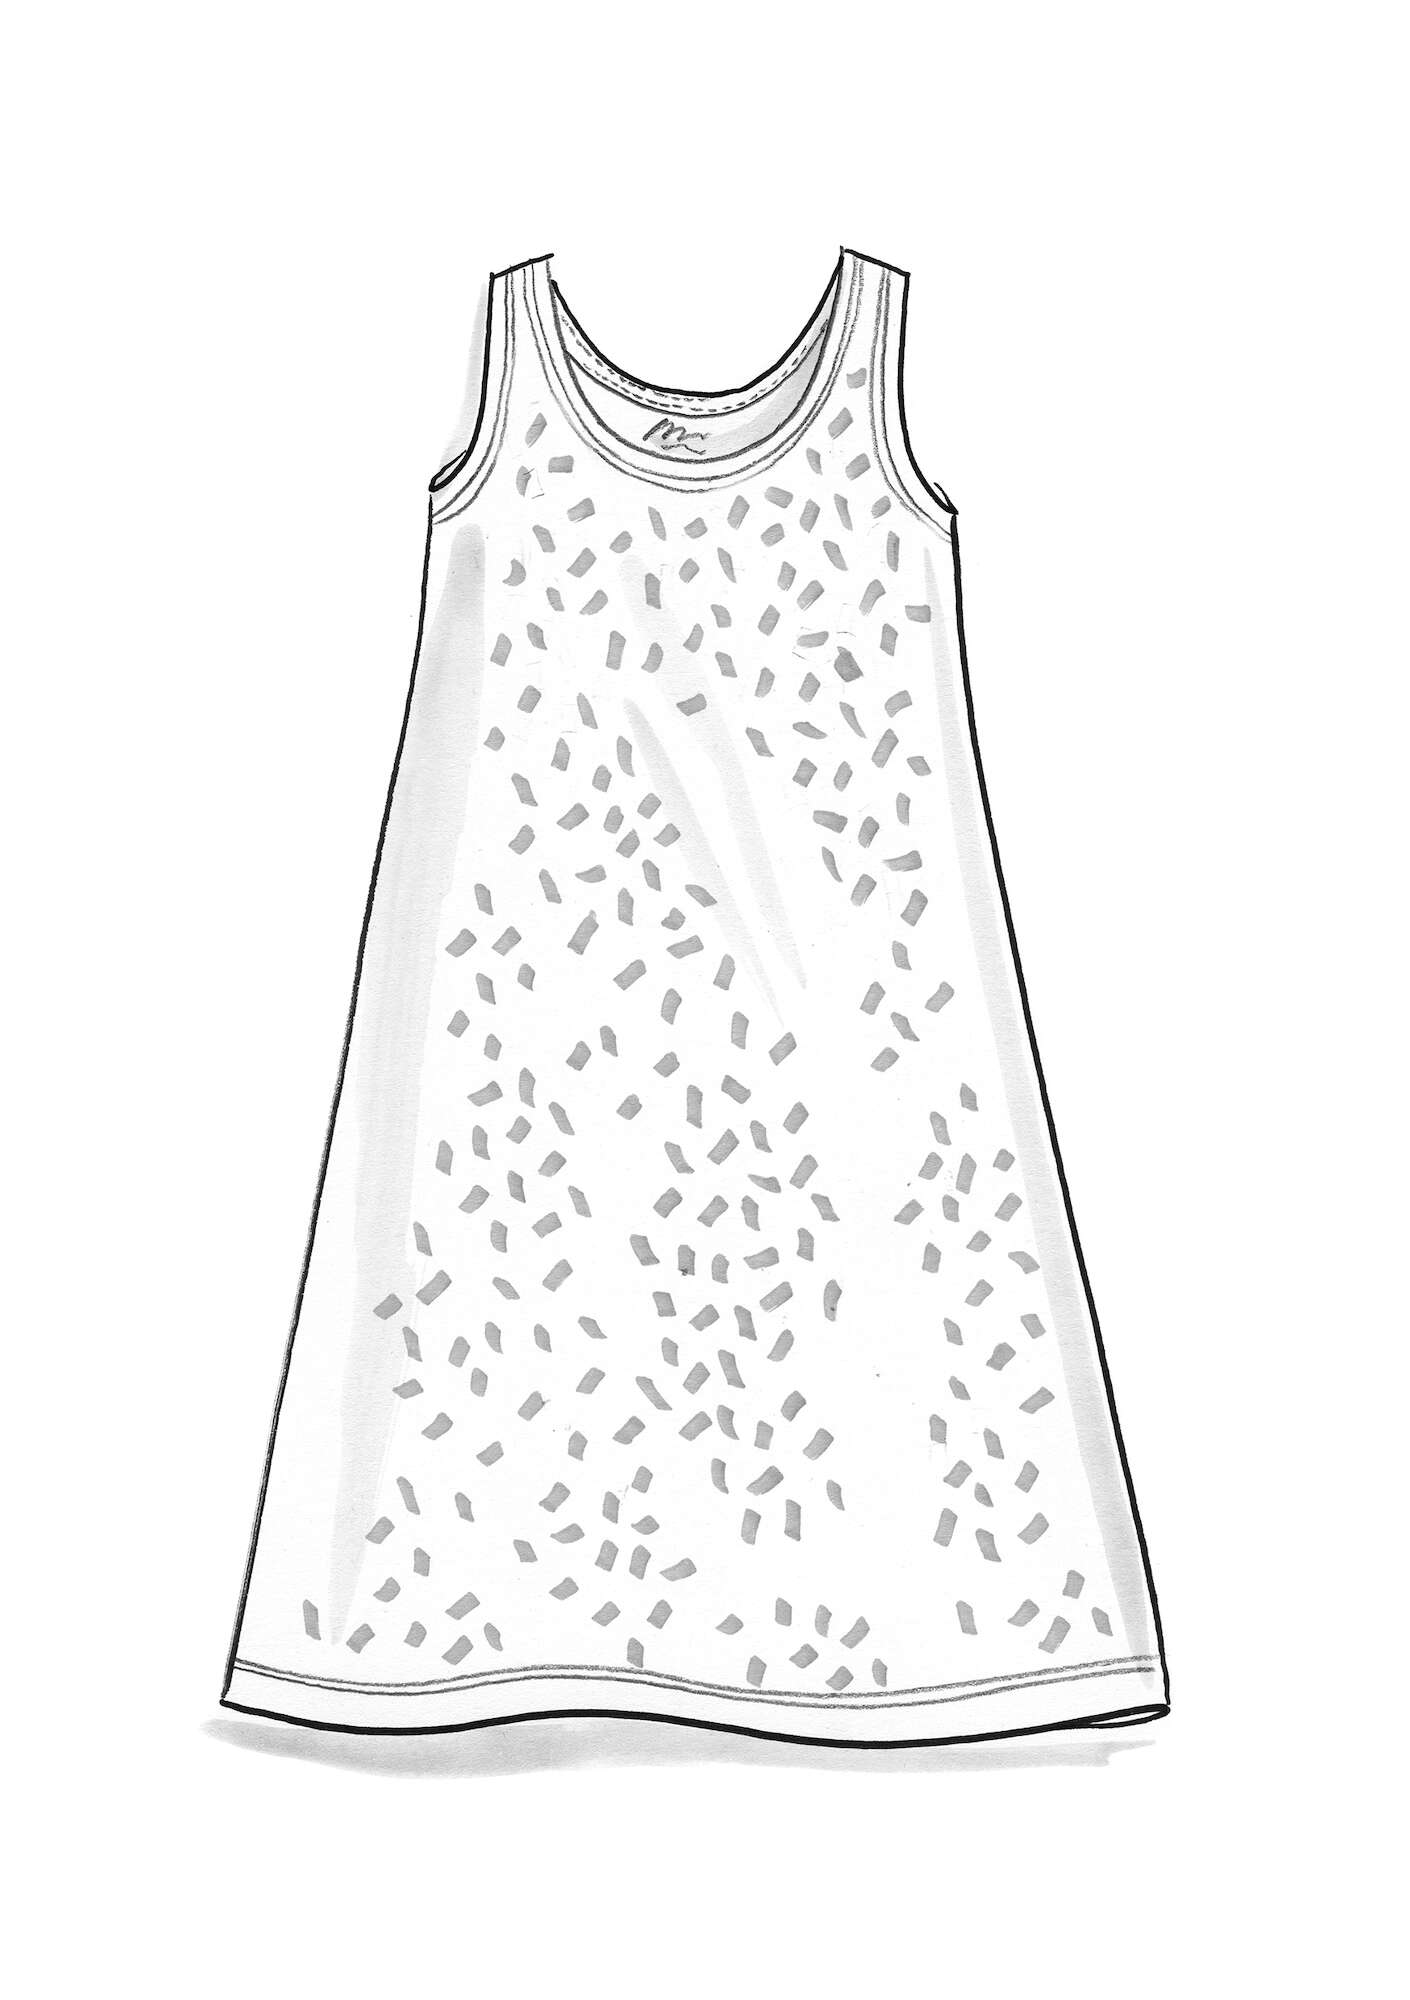 “Tilde” sleeveless jersey dress in lyocell/spandex dijon/patterned